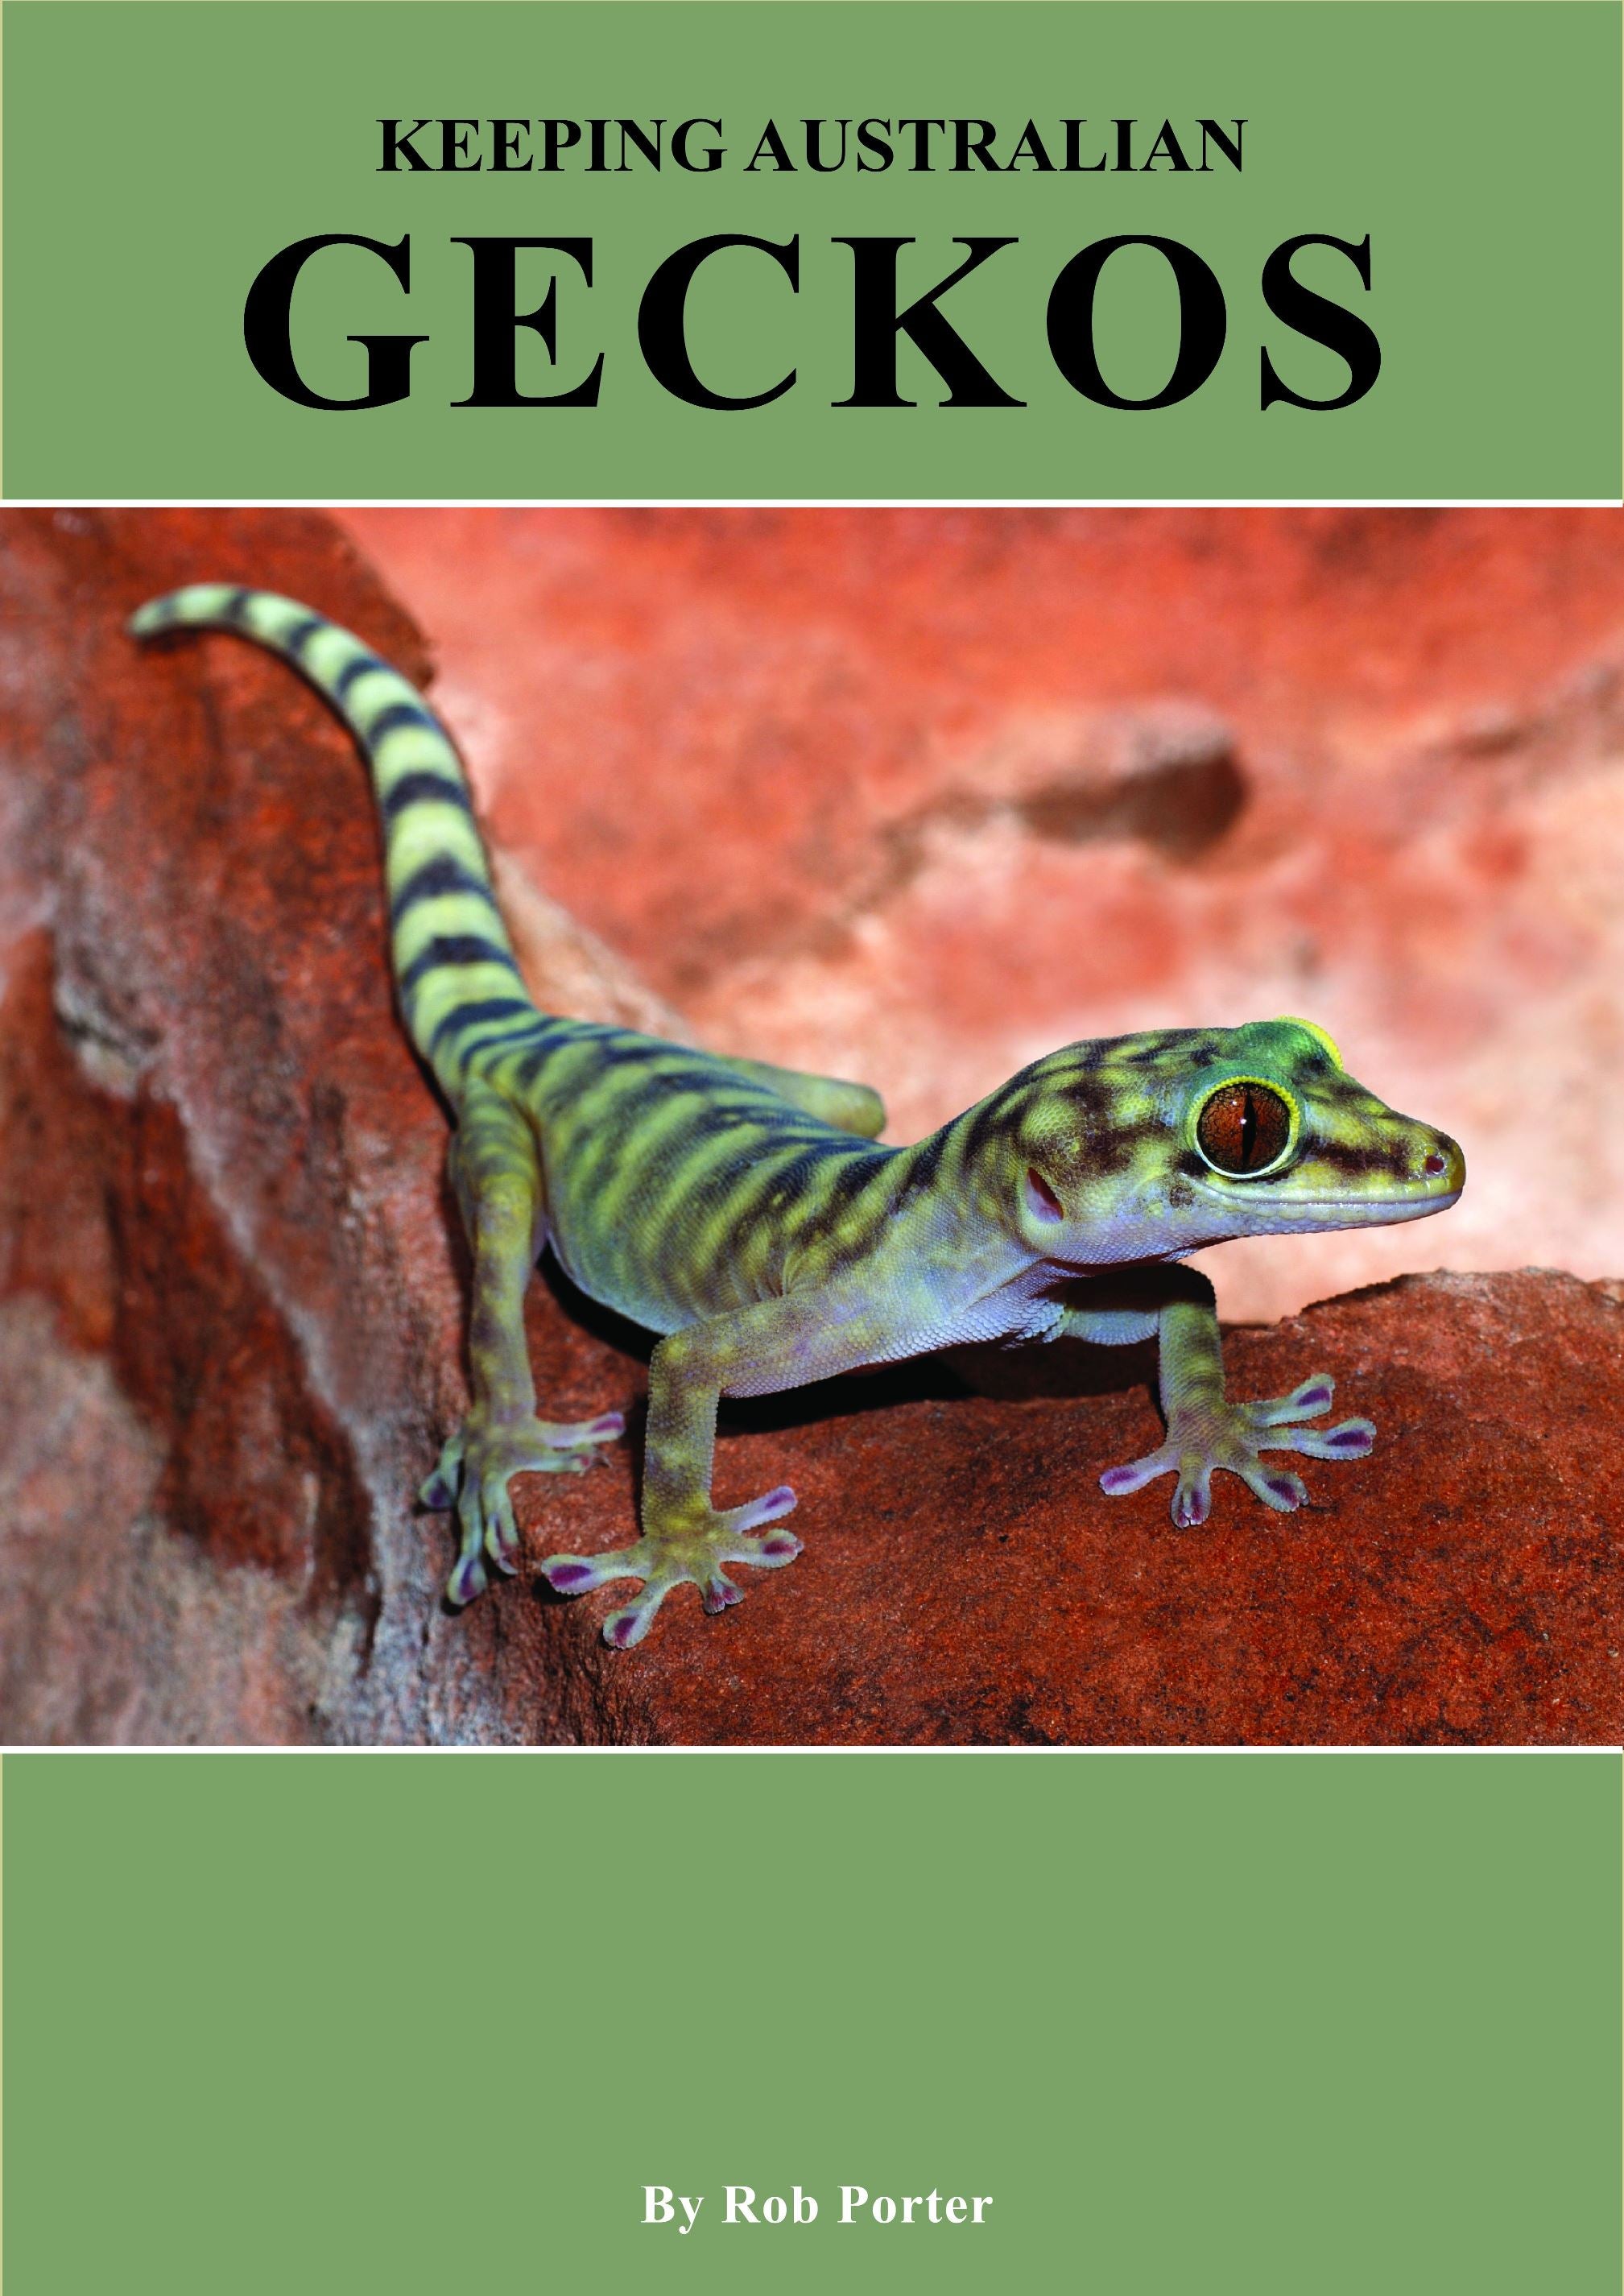 Keeping Geckos